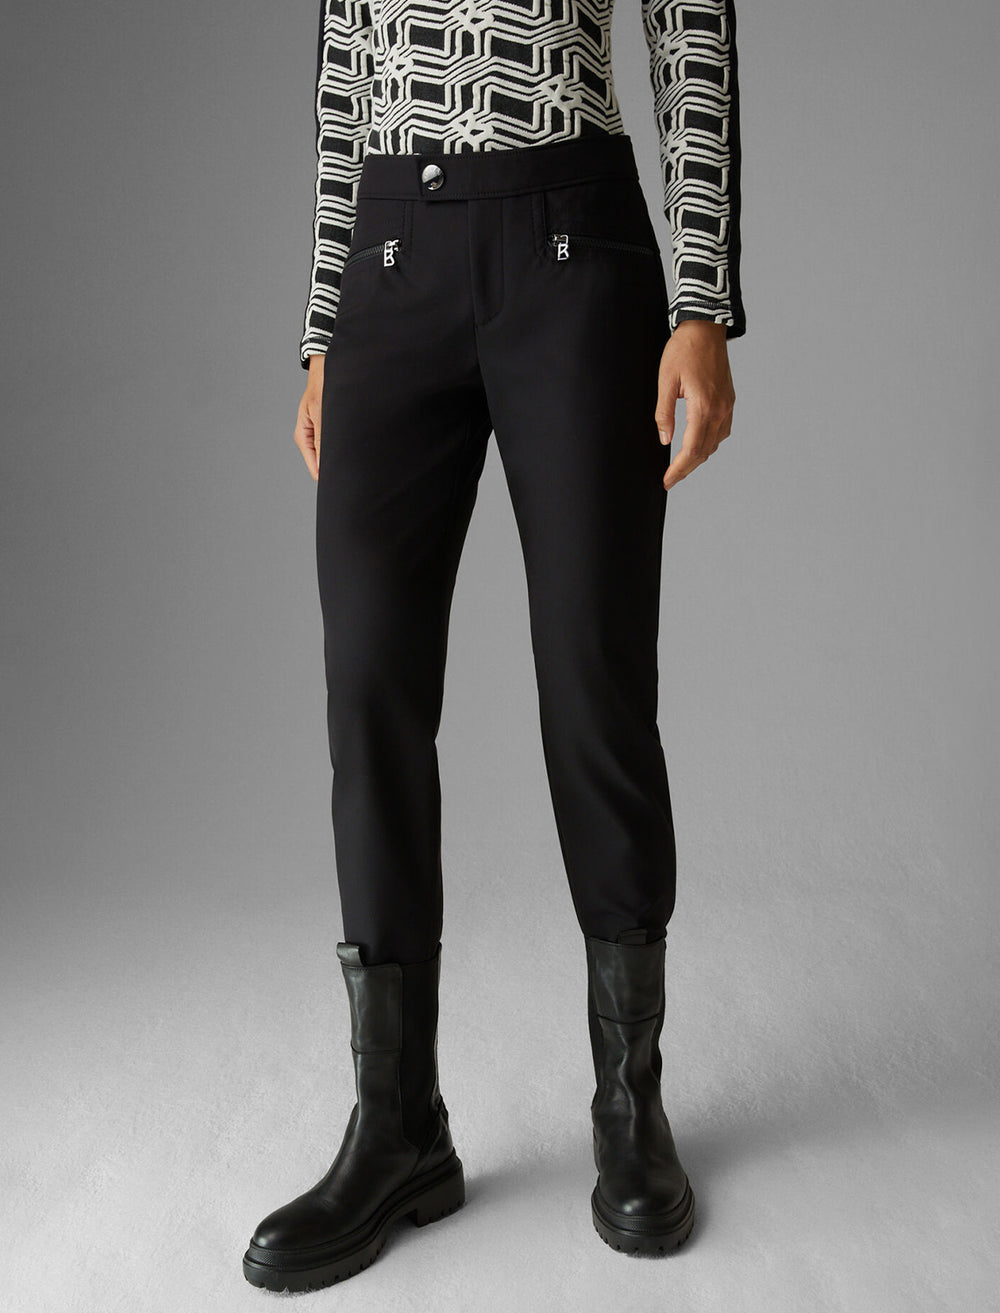 Model wearing Bogner's lindy pant in black.